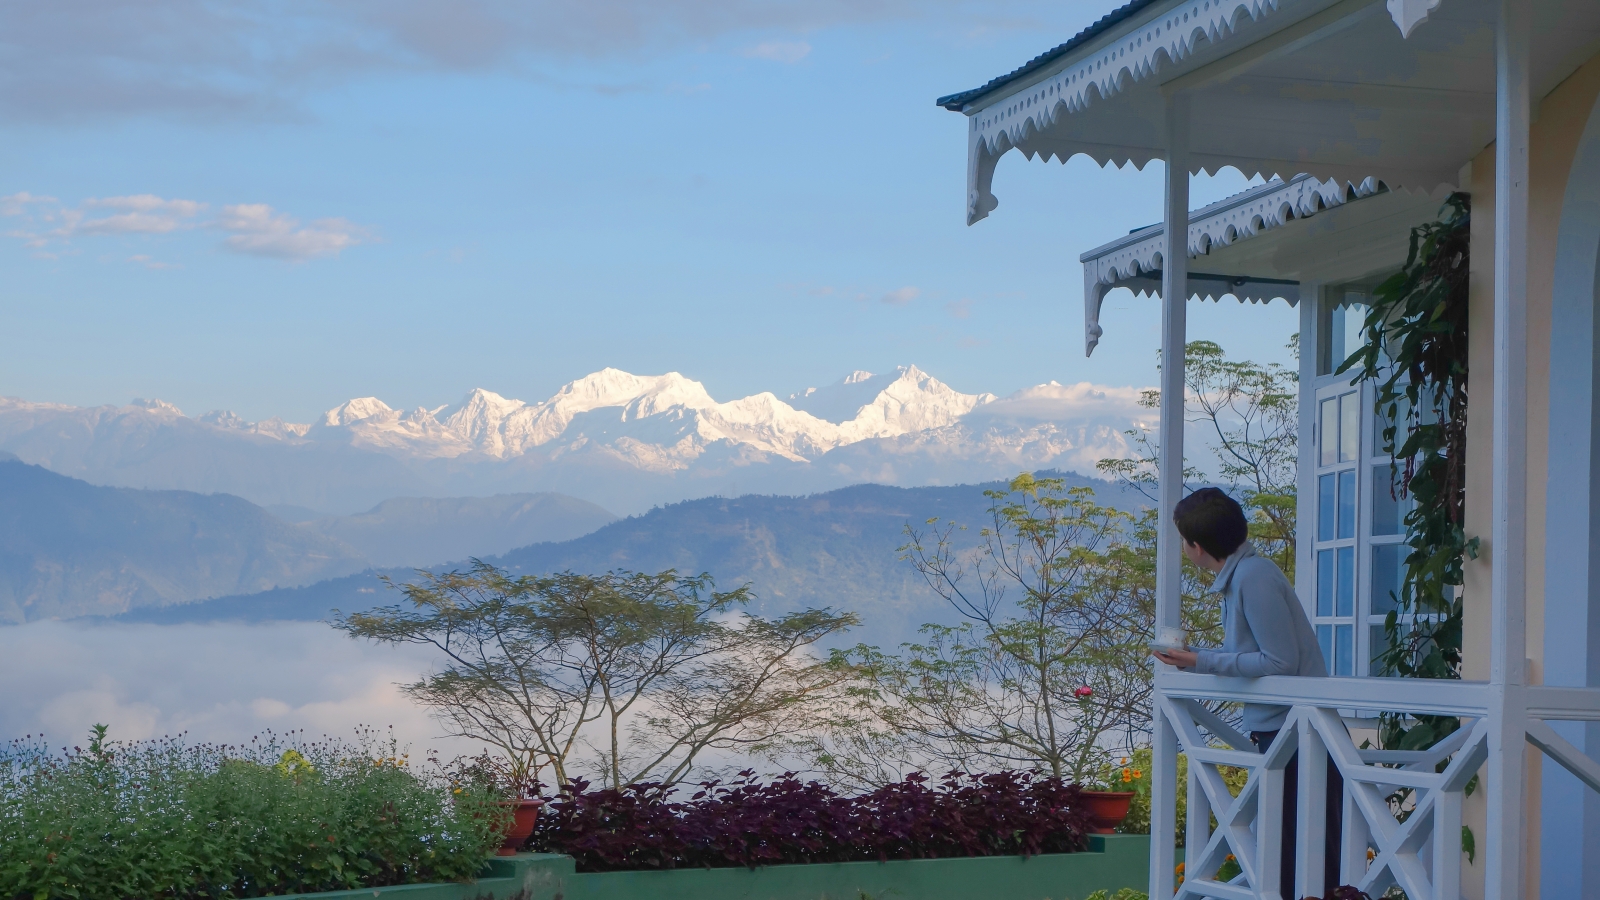 Mountain views from the Glenburn Tea Estate in Darjeeling India